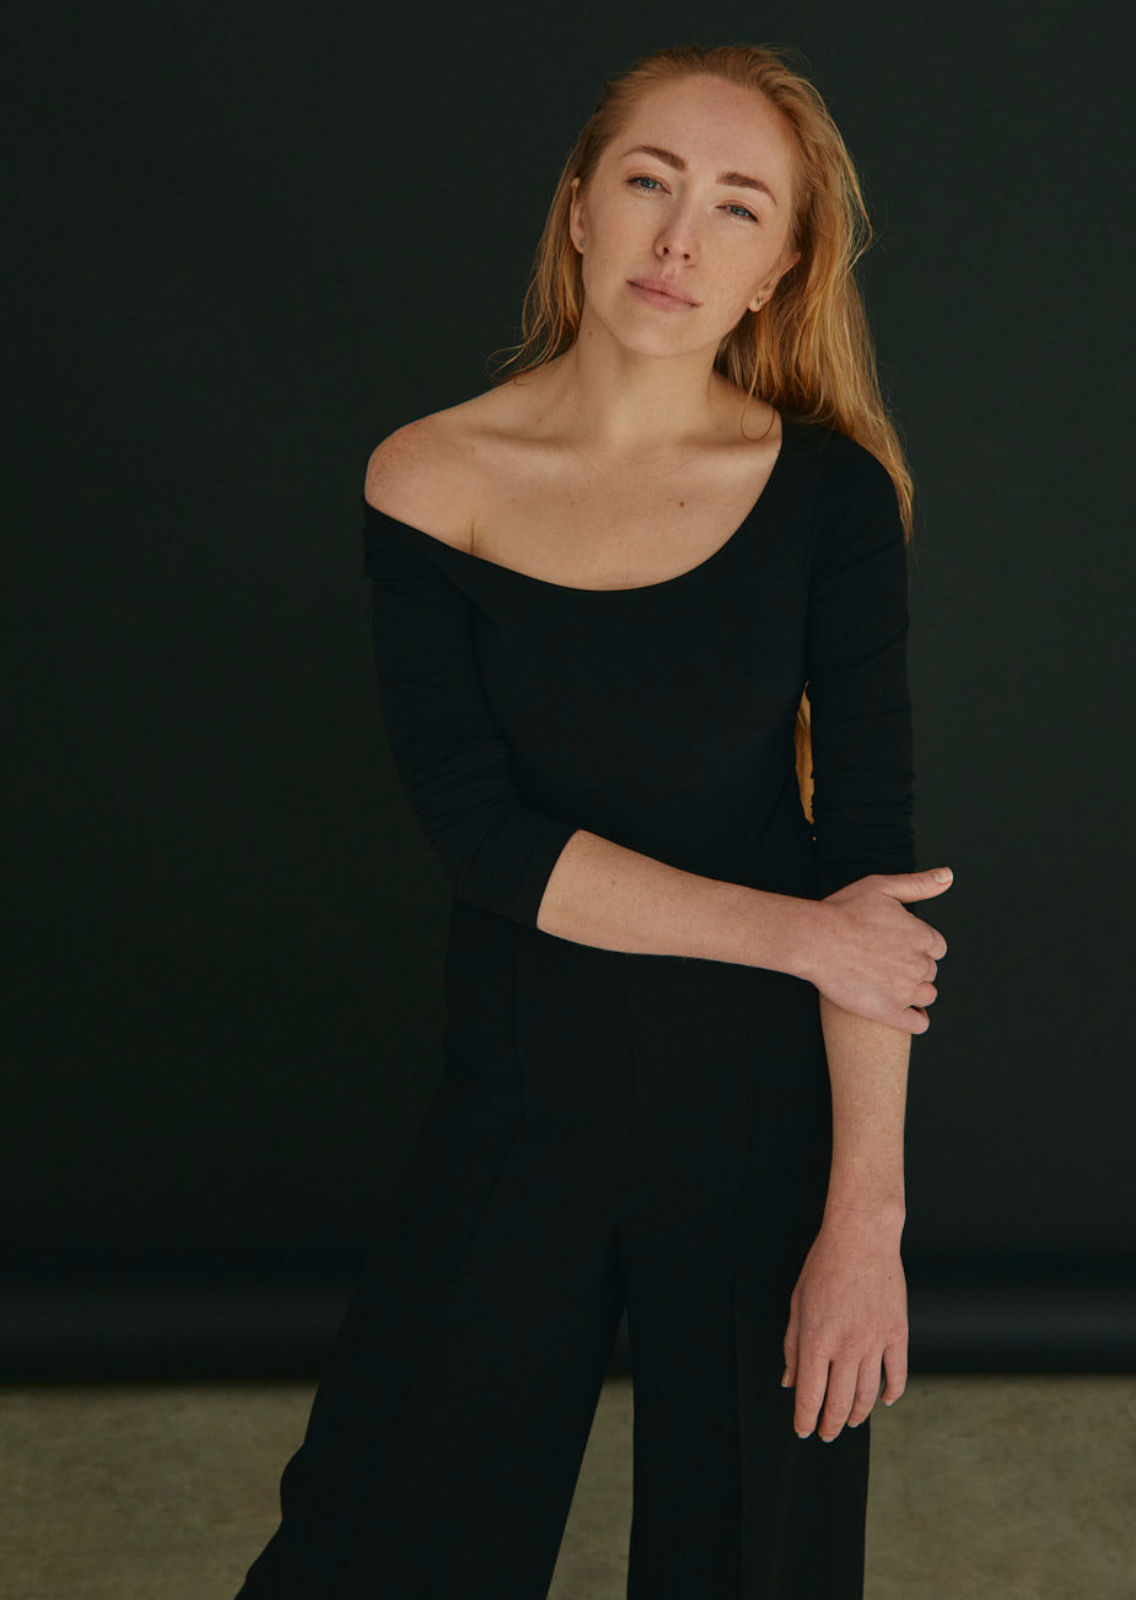 NATALI VAITKEVICH. Carmen Duran Model Agency.